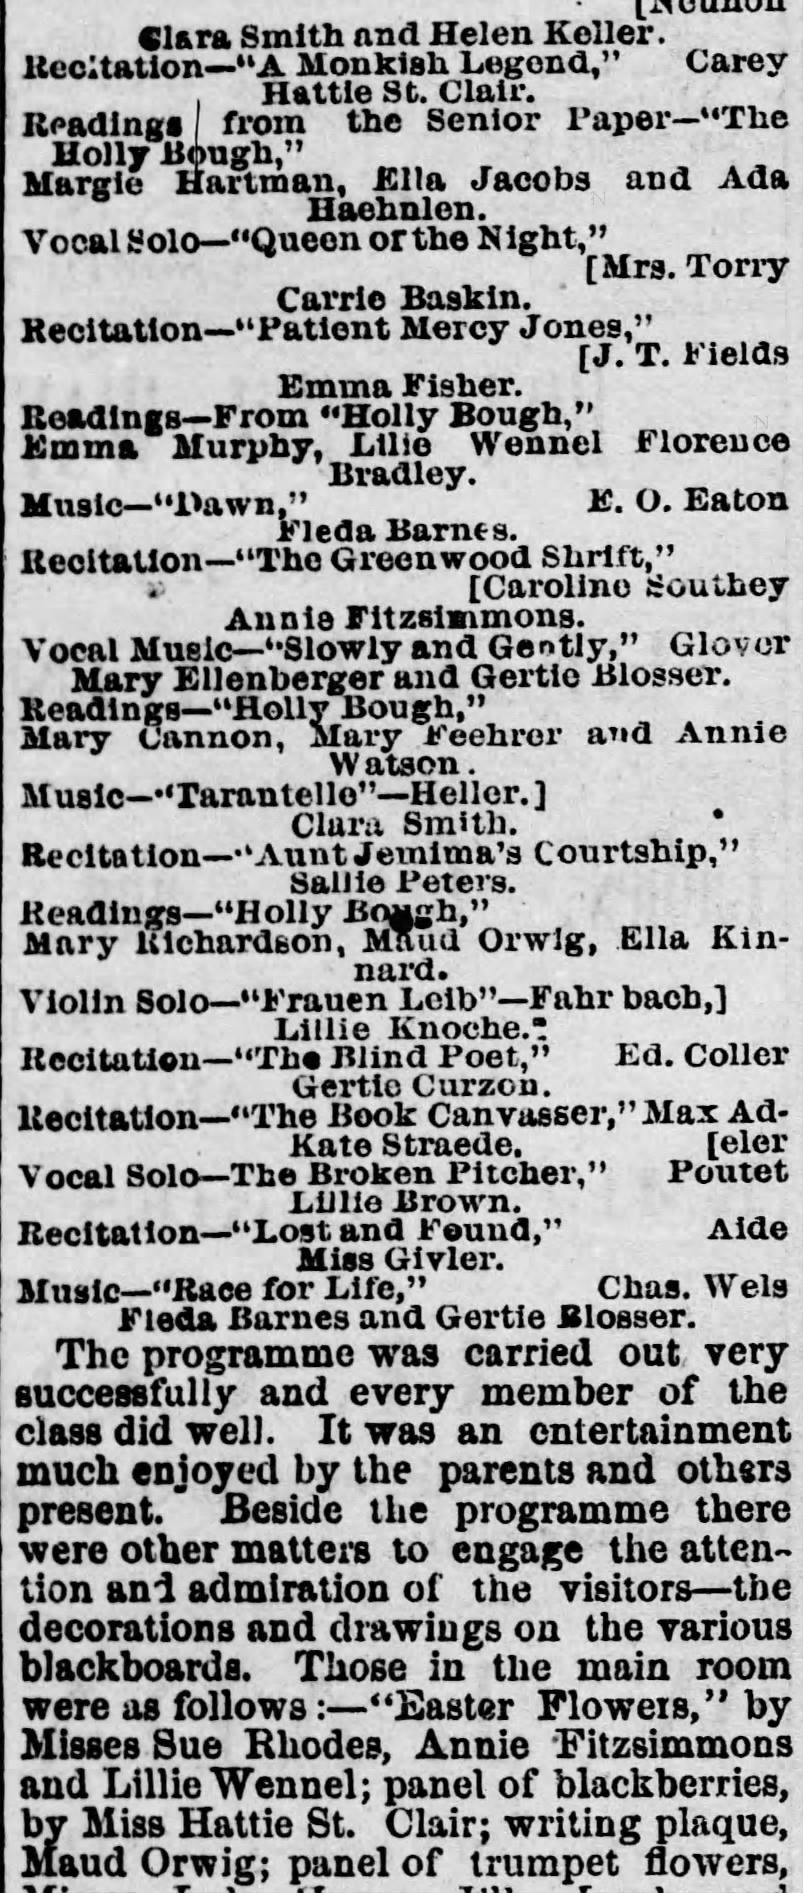 Hattie St. Clair recital
1885